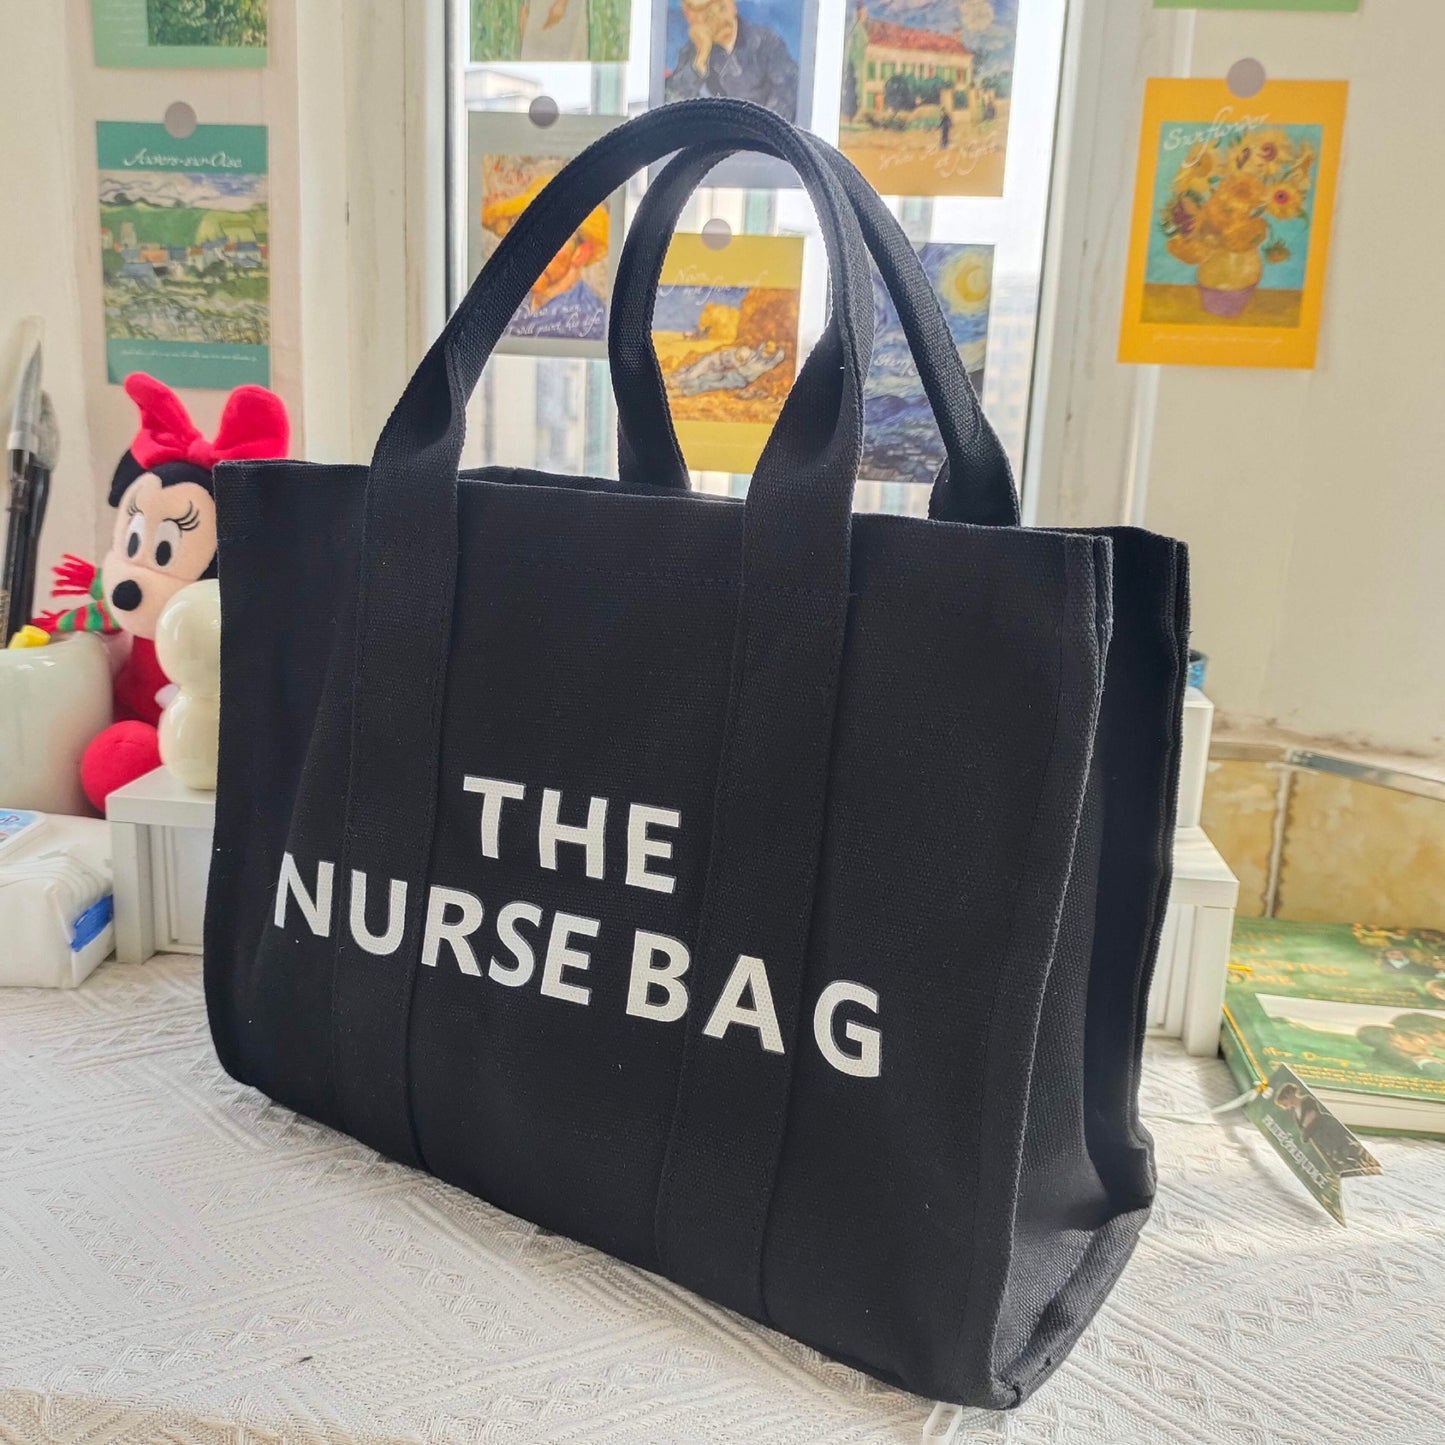 The Nurse Bag